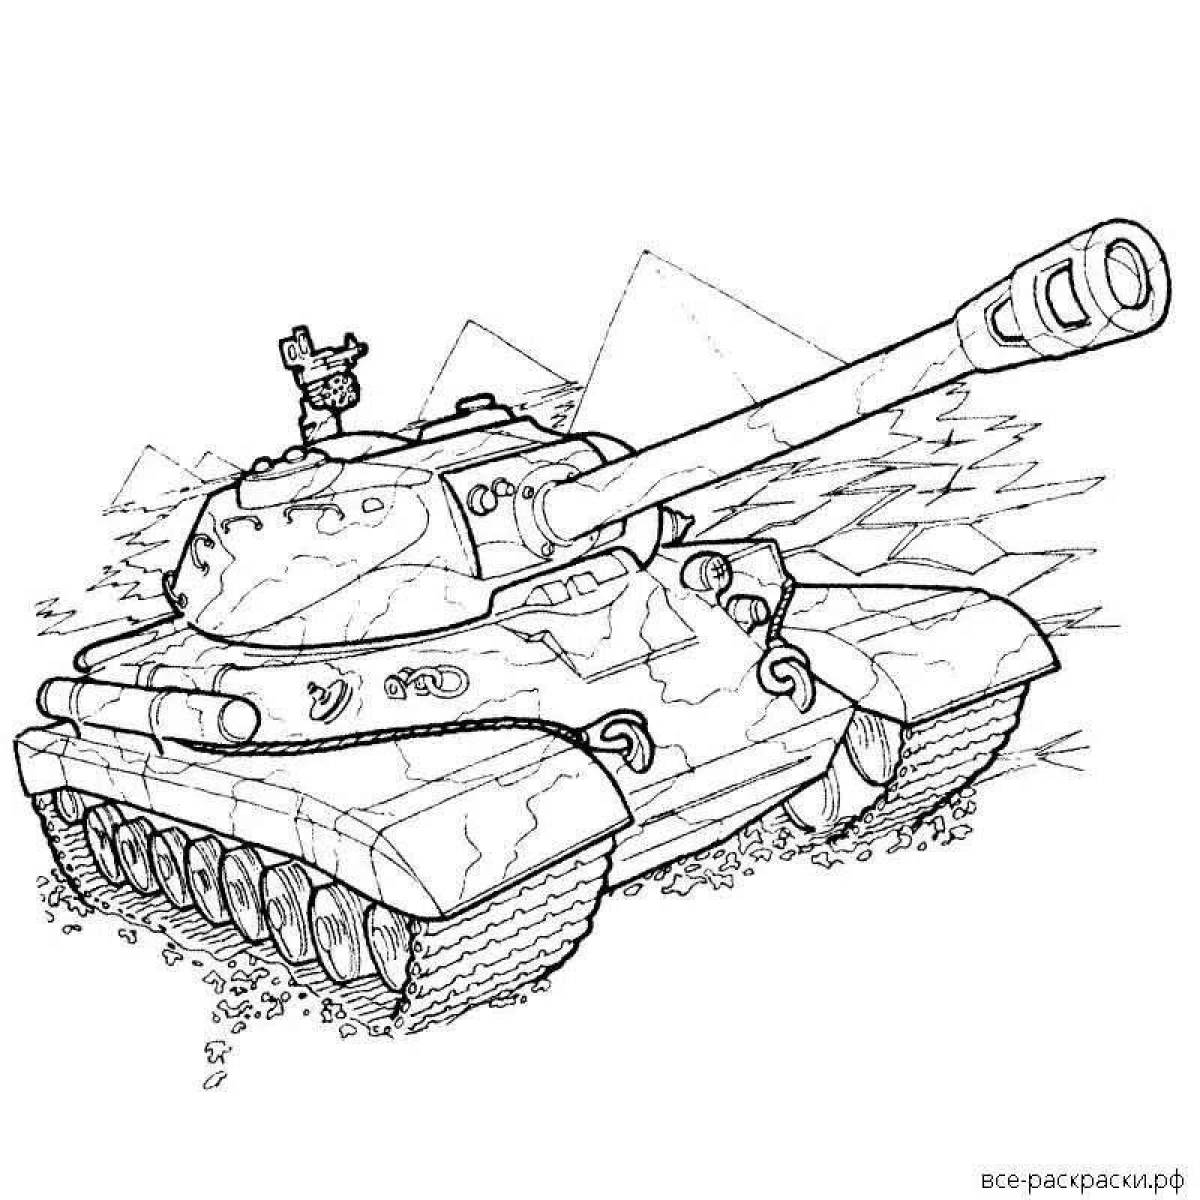 World of tanks #3